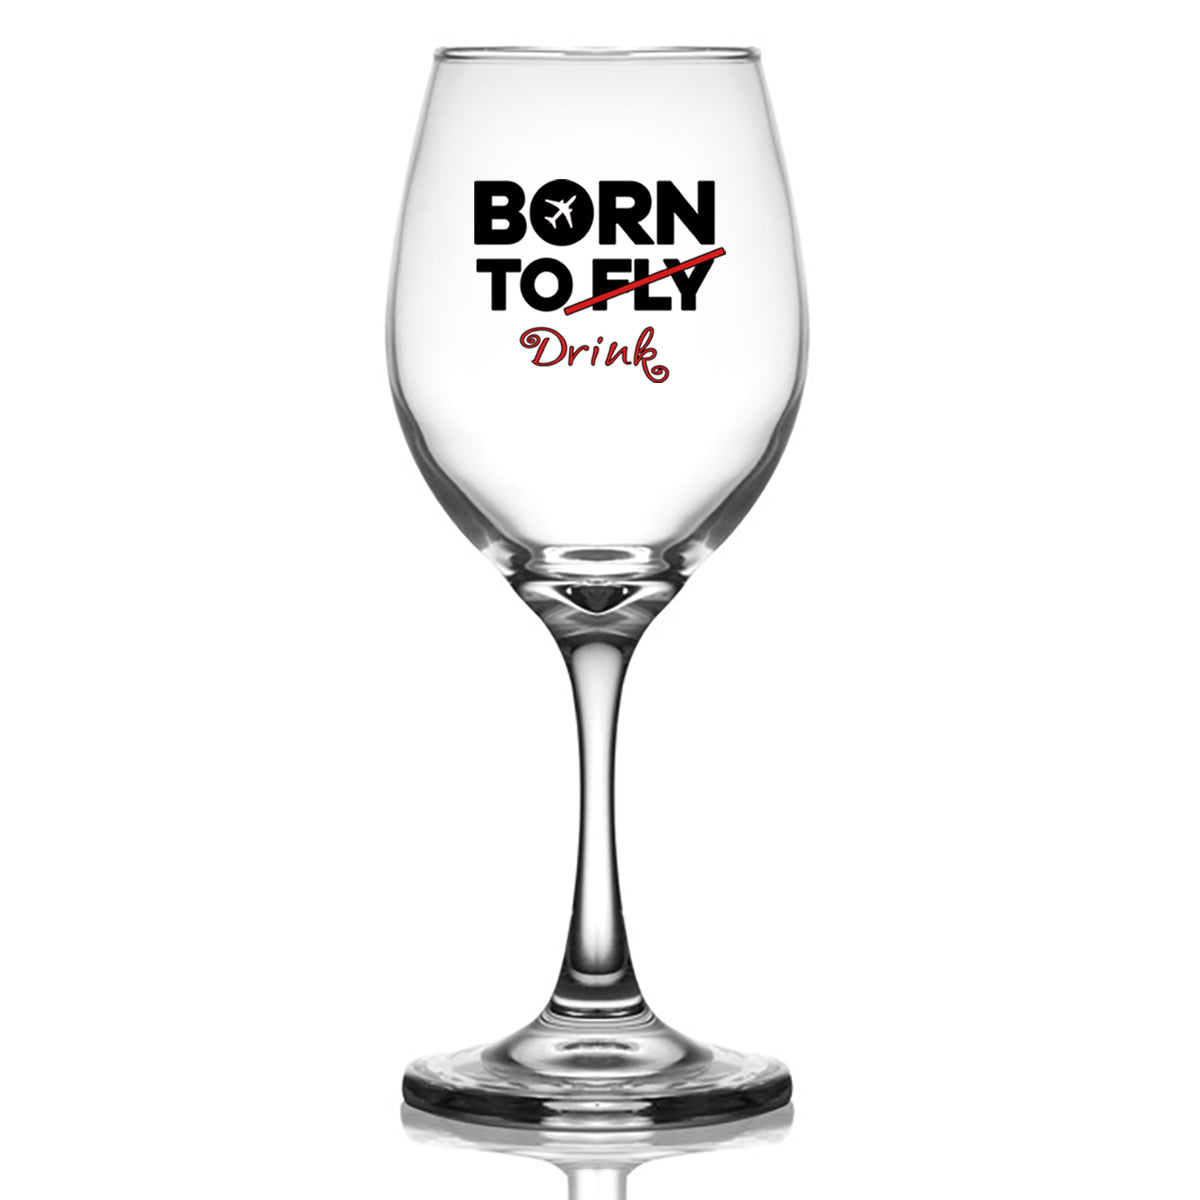 Born To Drink Designed Wine Glasses